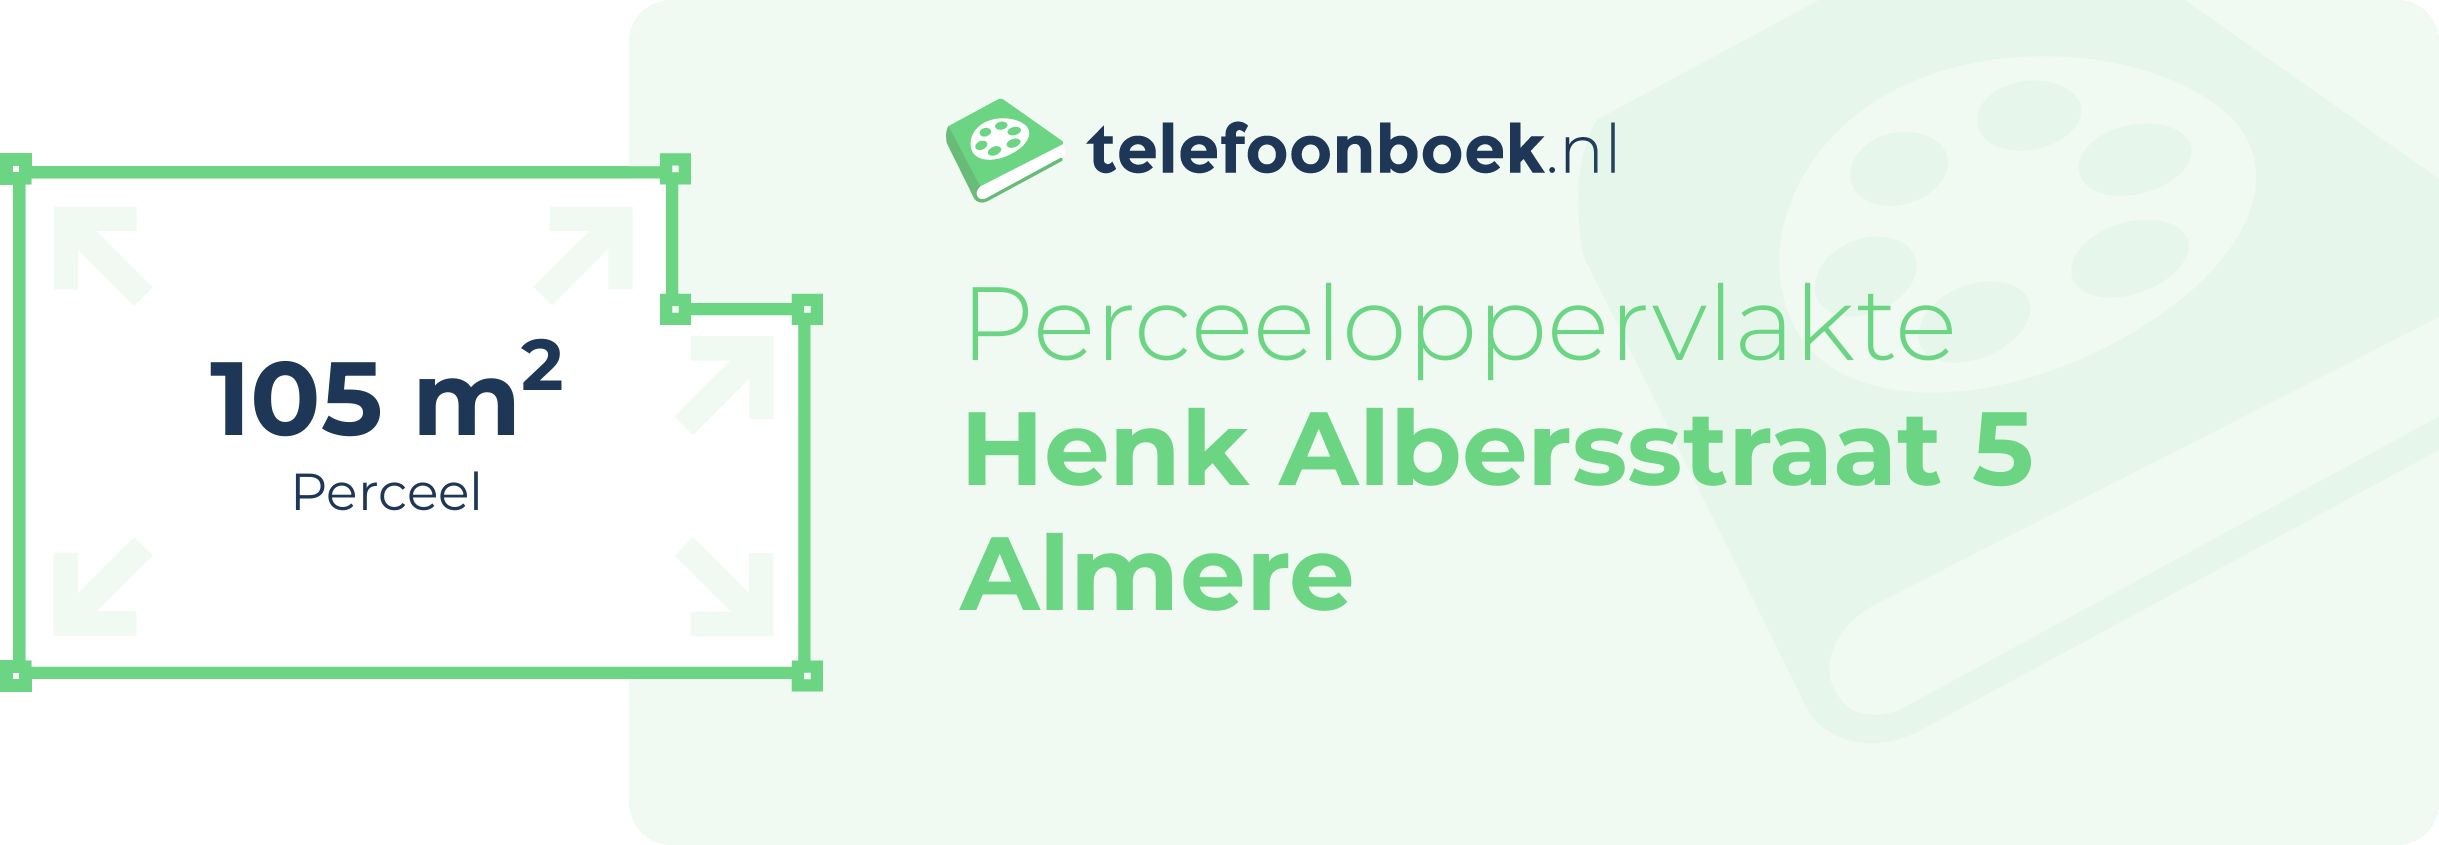 Perceeloppervlakte Henk Albersstraat 5 Almere